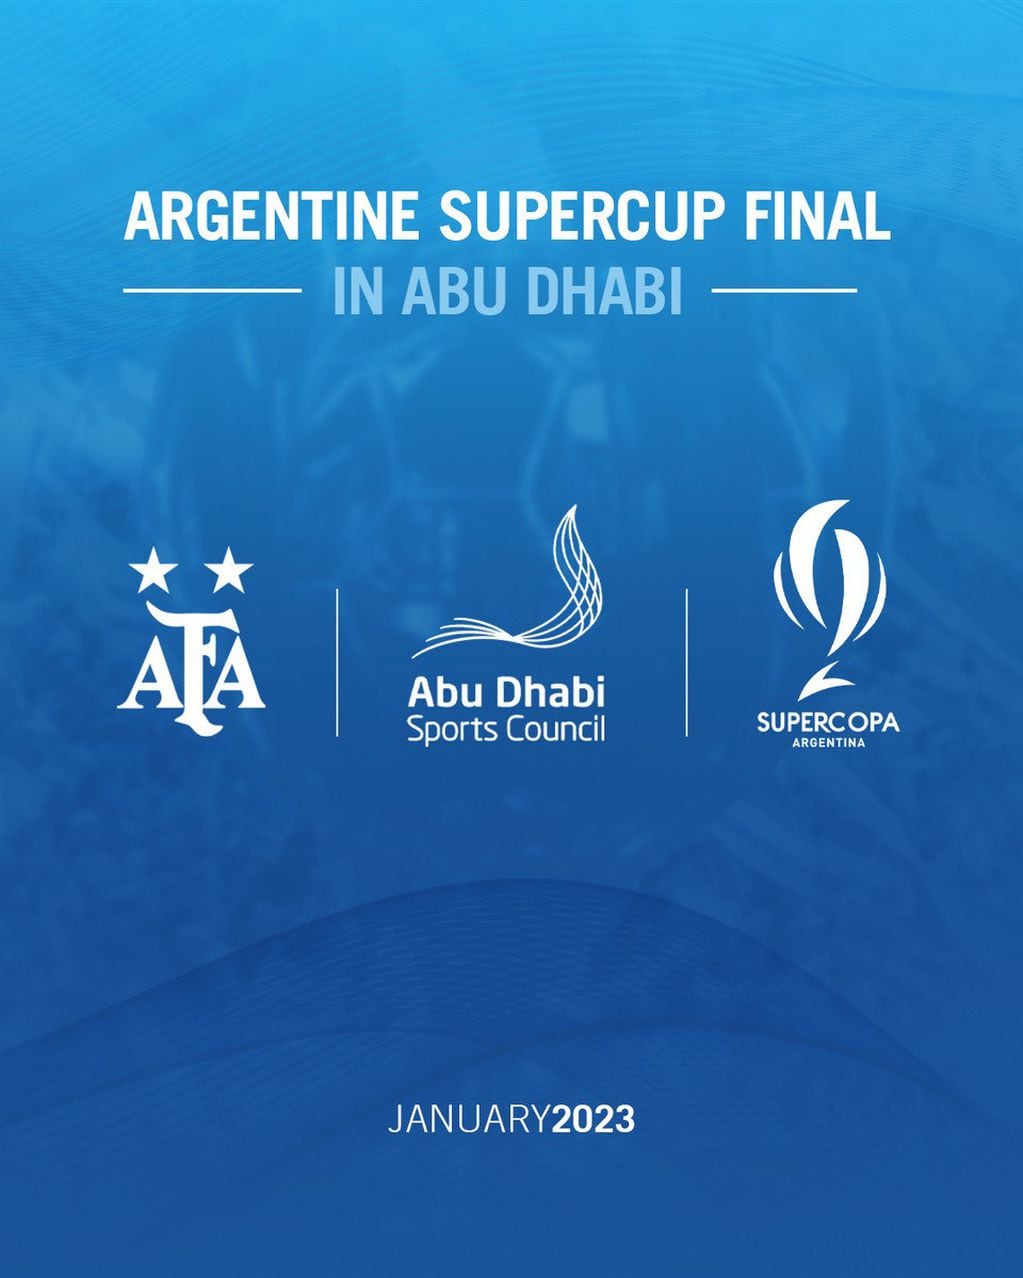 Ya es oficial, la Supercopa Argentina 2023 será en Abu Dhabi.